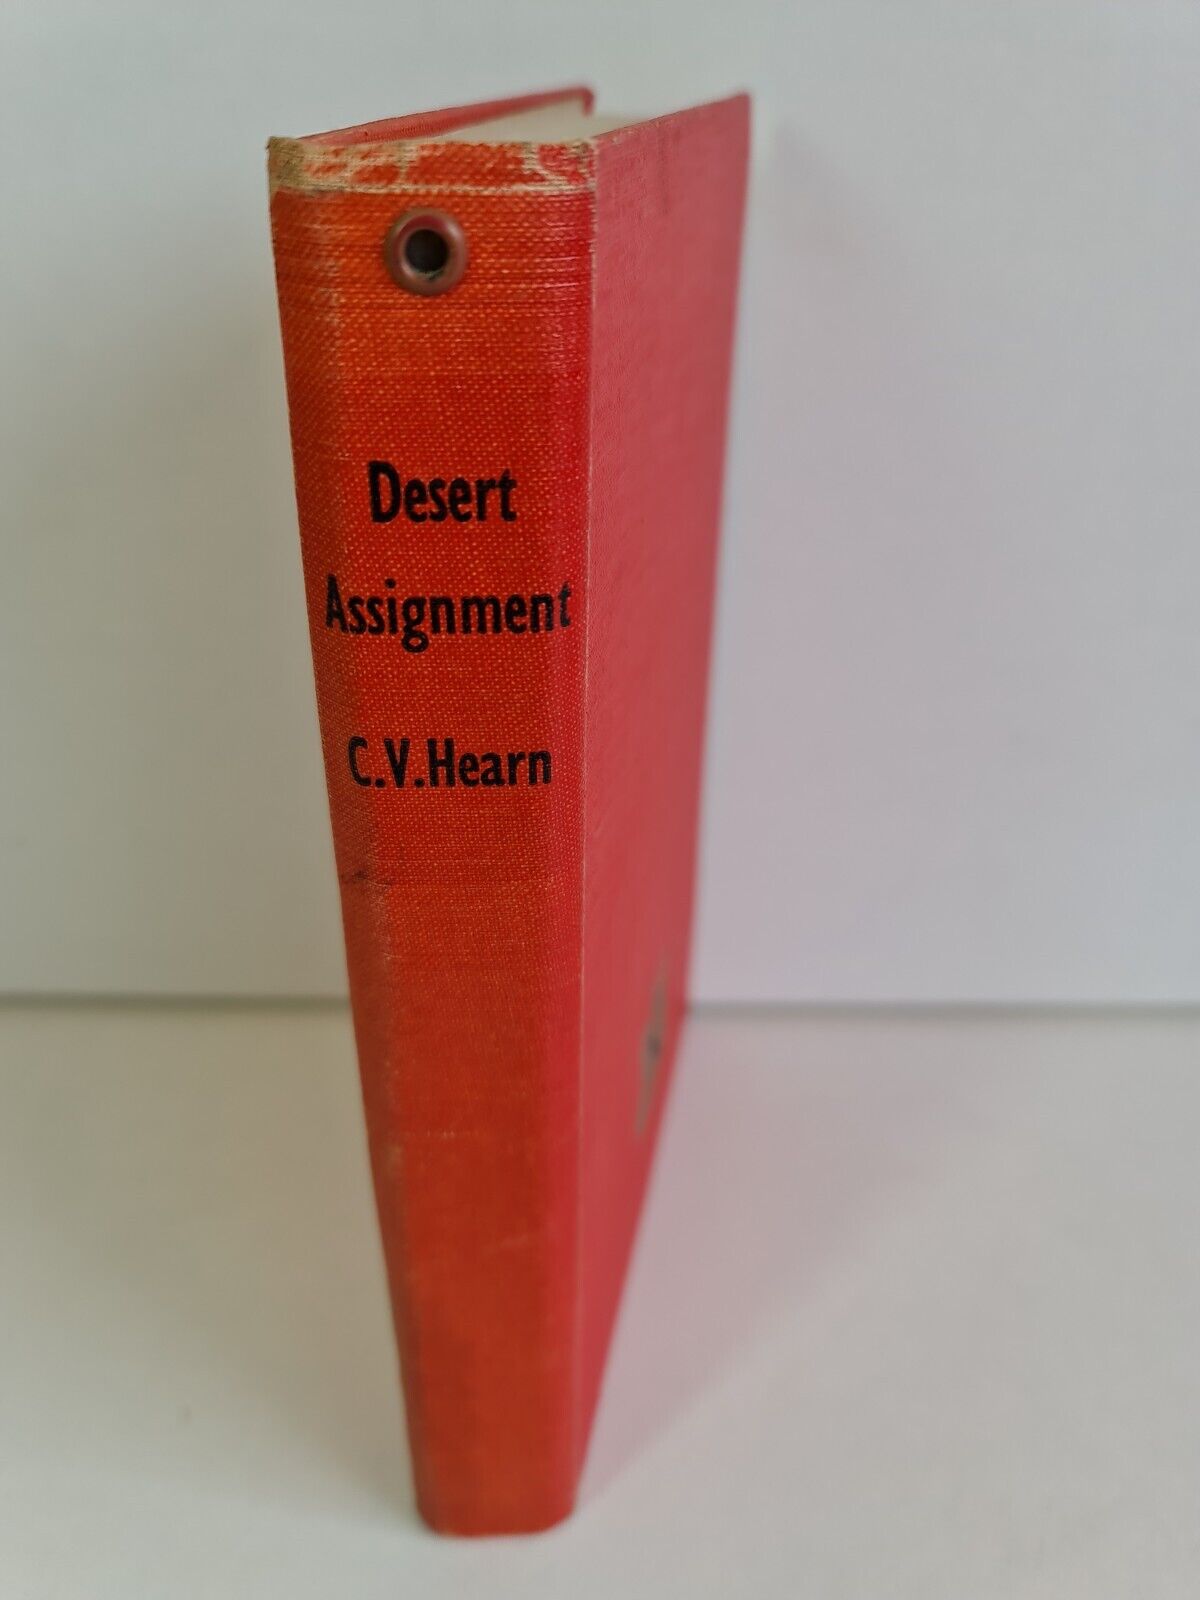 Desert Assignment by C V Hearn (1963)